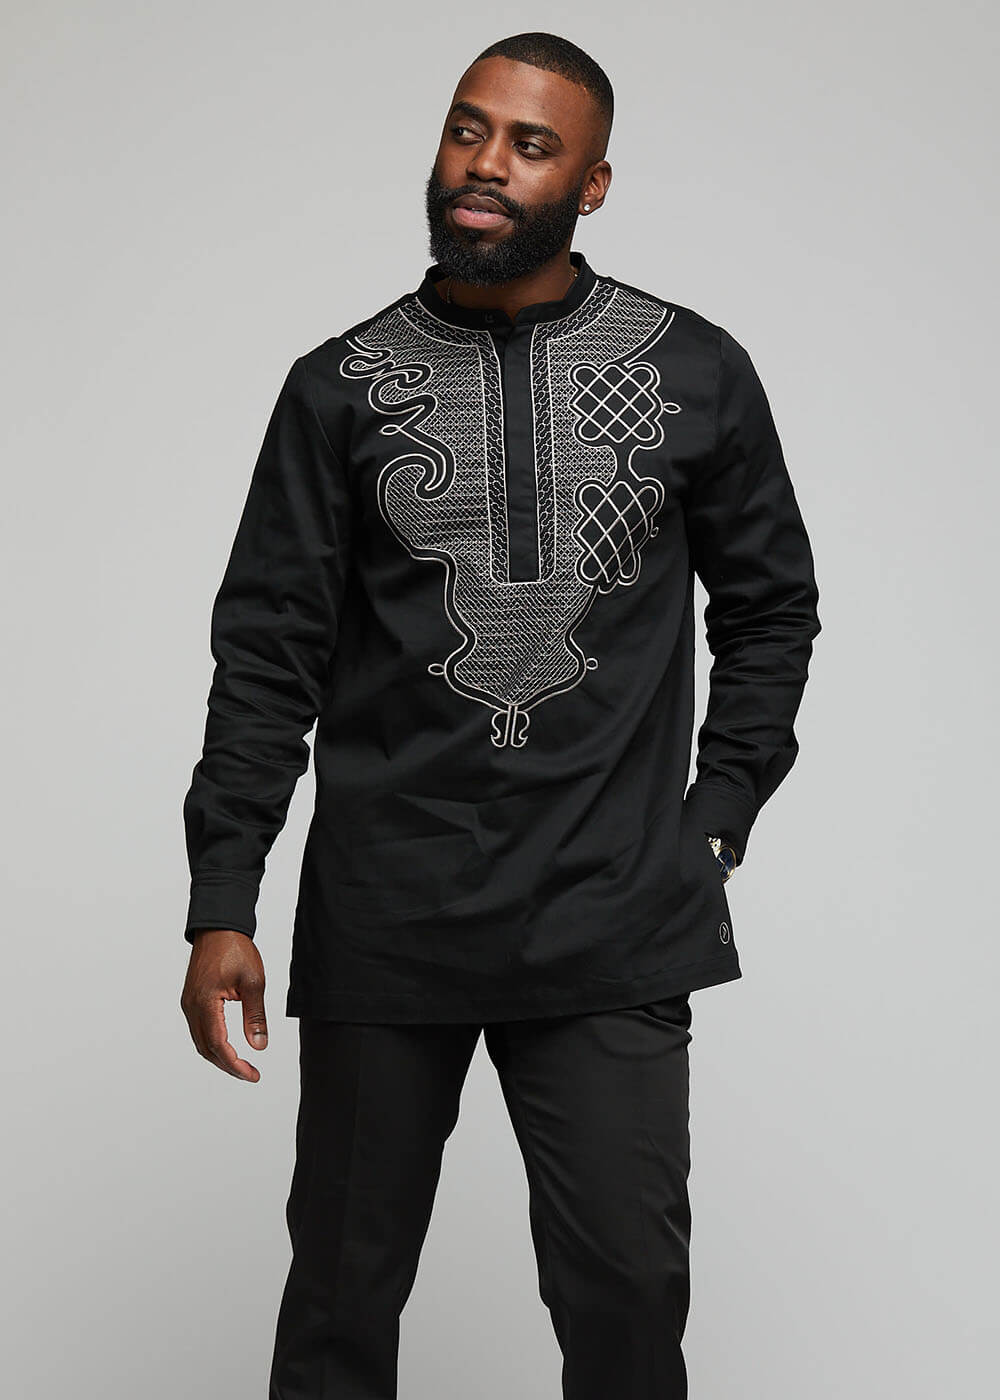 Dubaku Men's Traditional African Embroidery Shirt (Black)